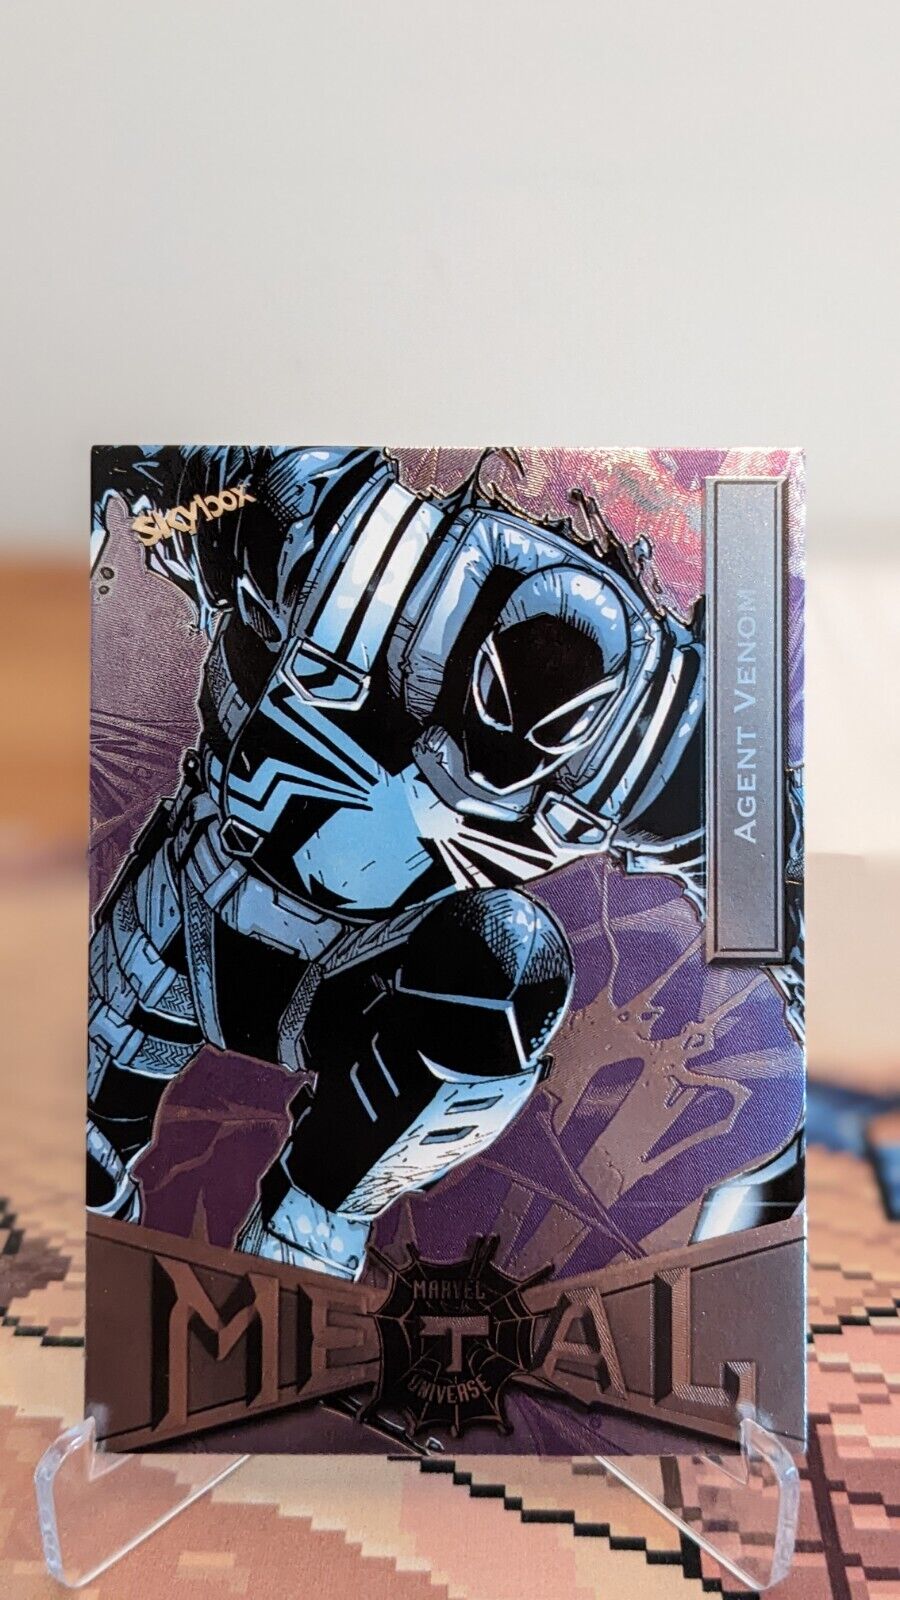 2021 Skybox Spider-Man Metal Universe Pick a card/Complete ur set